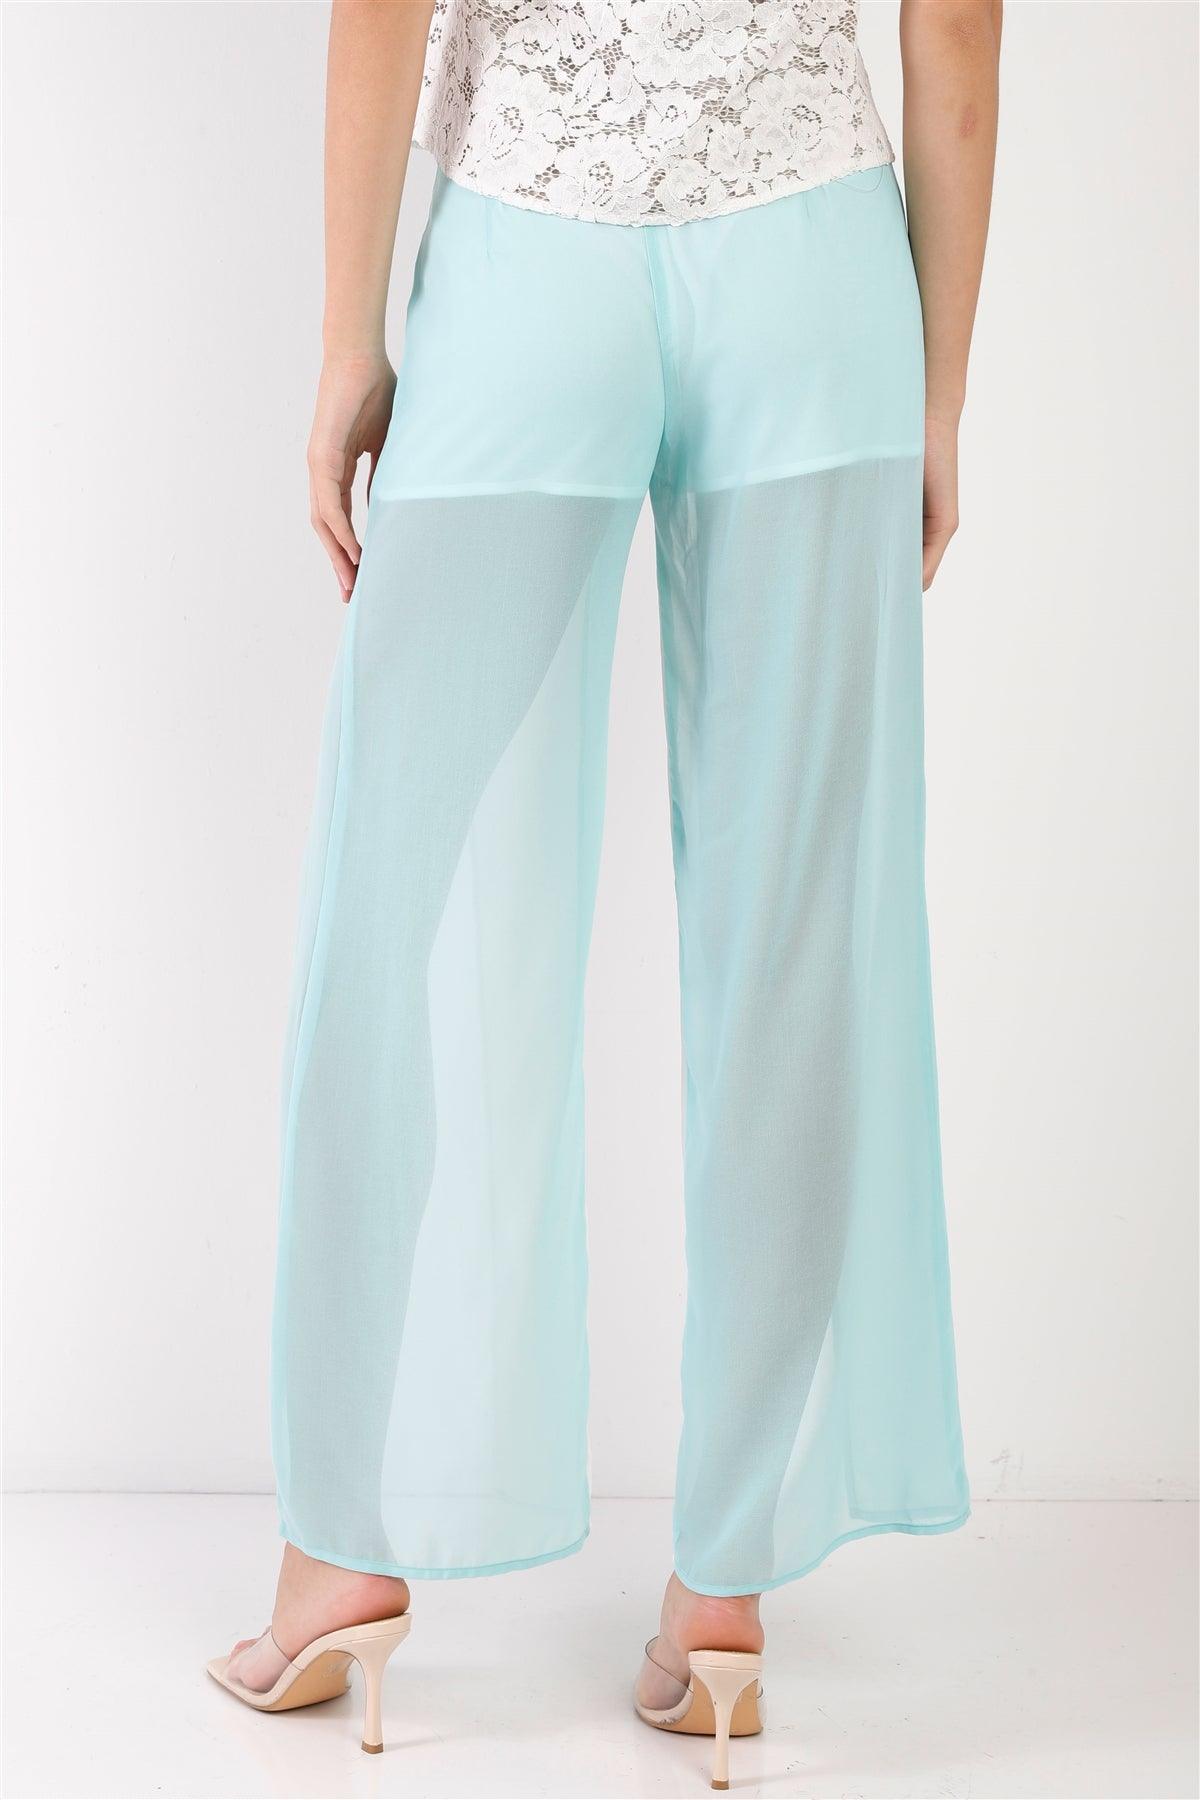 Aqua & White Color Block Semi-Sheer Chiffon High Waist Front Slit Detail Wide Leg Pants /1-3-2